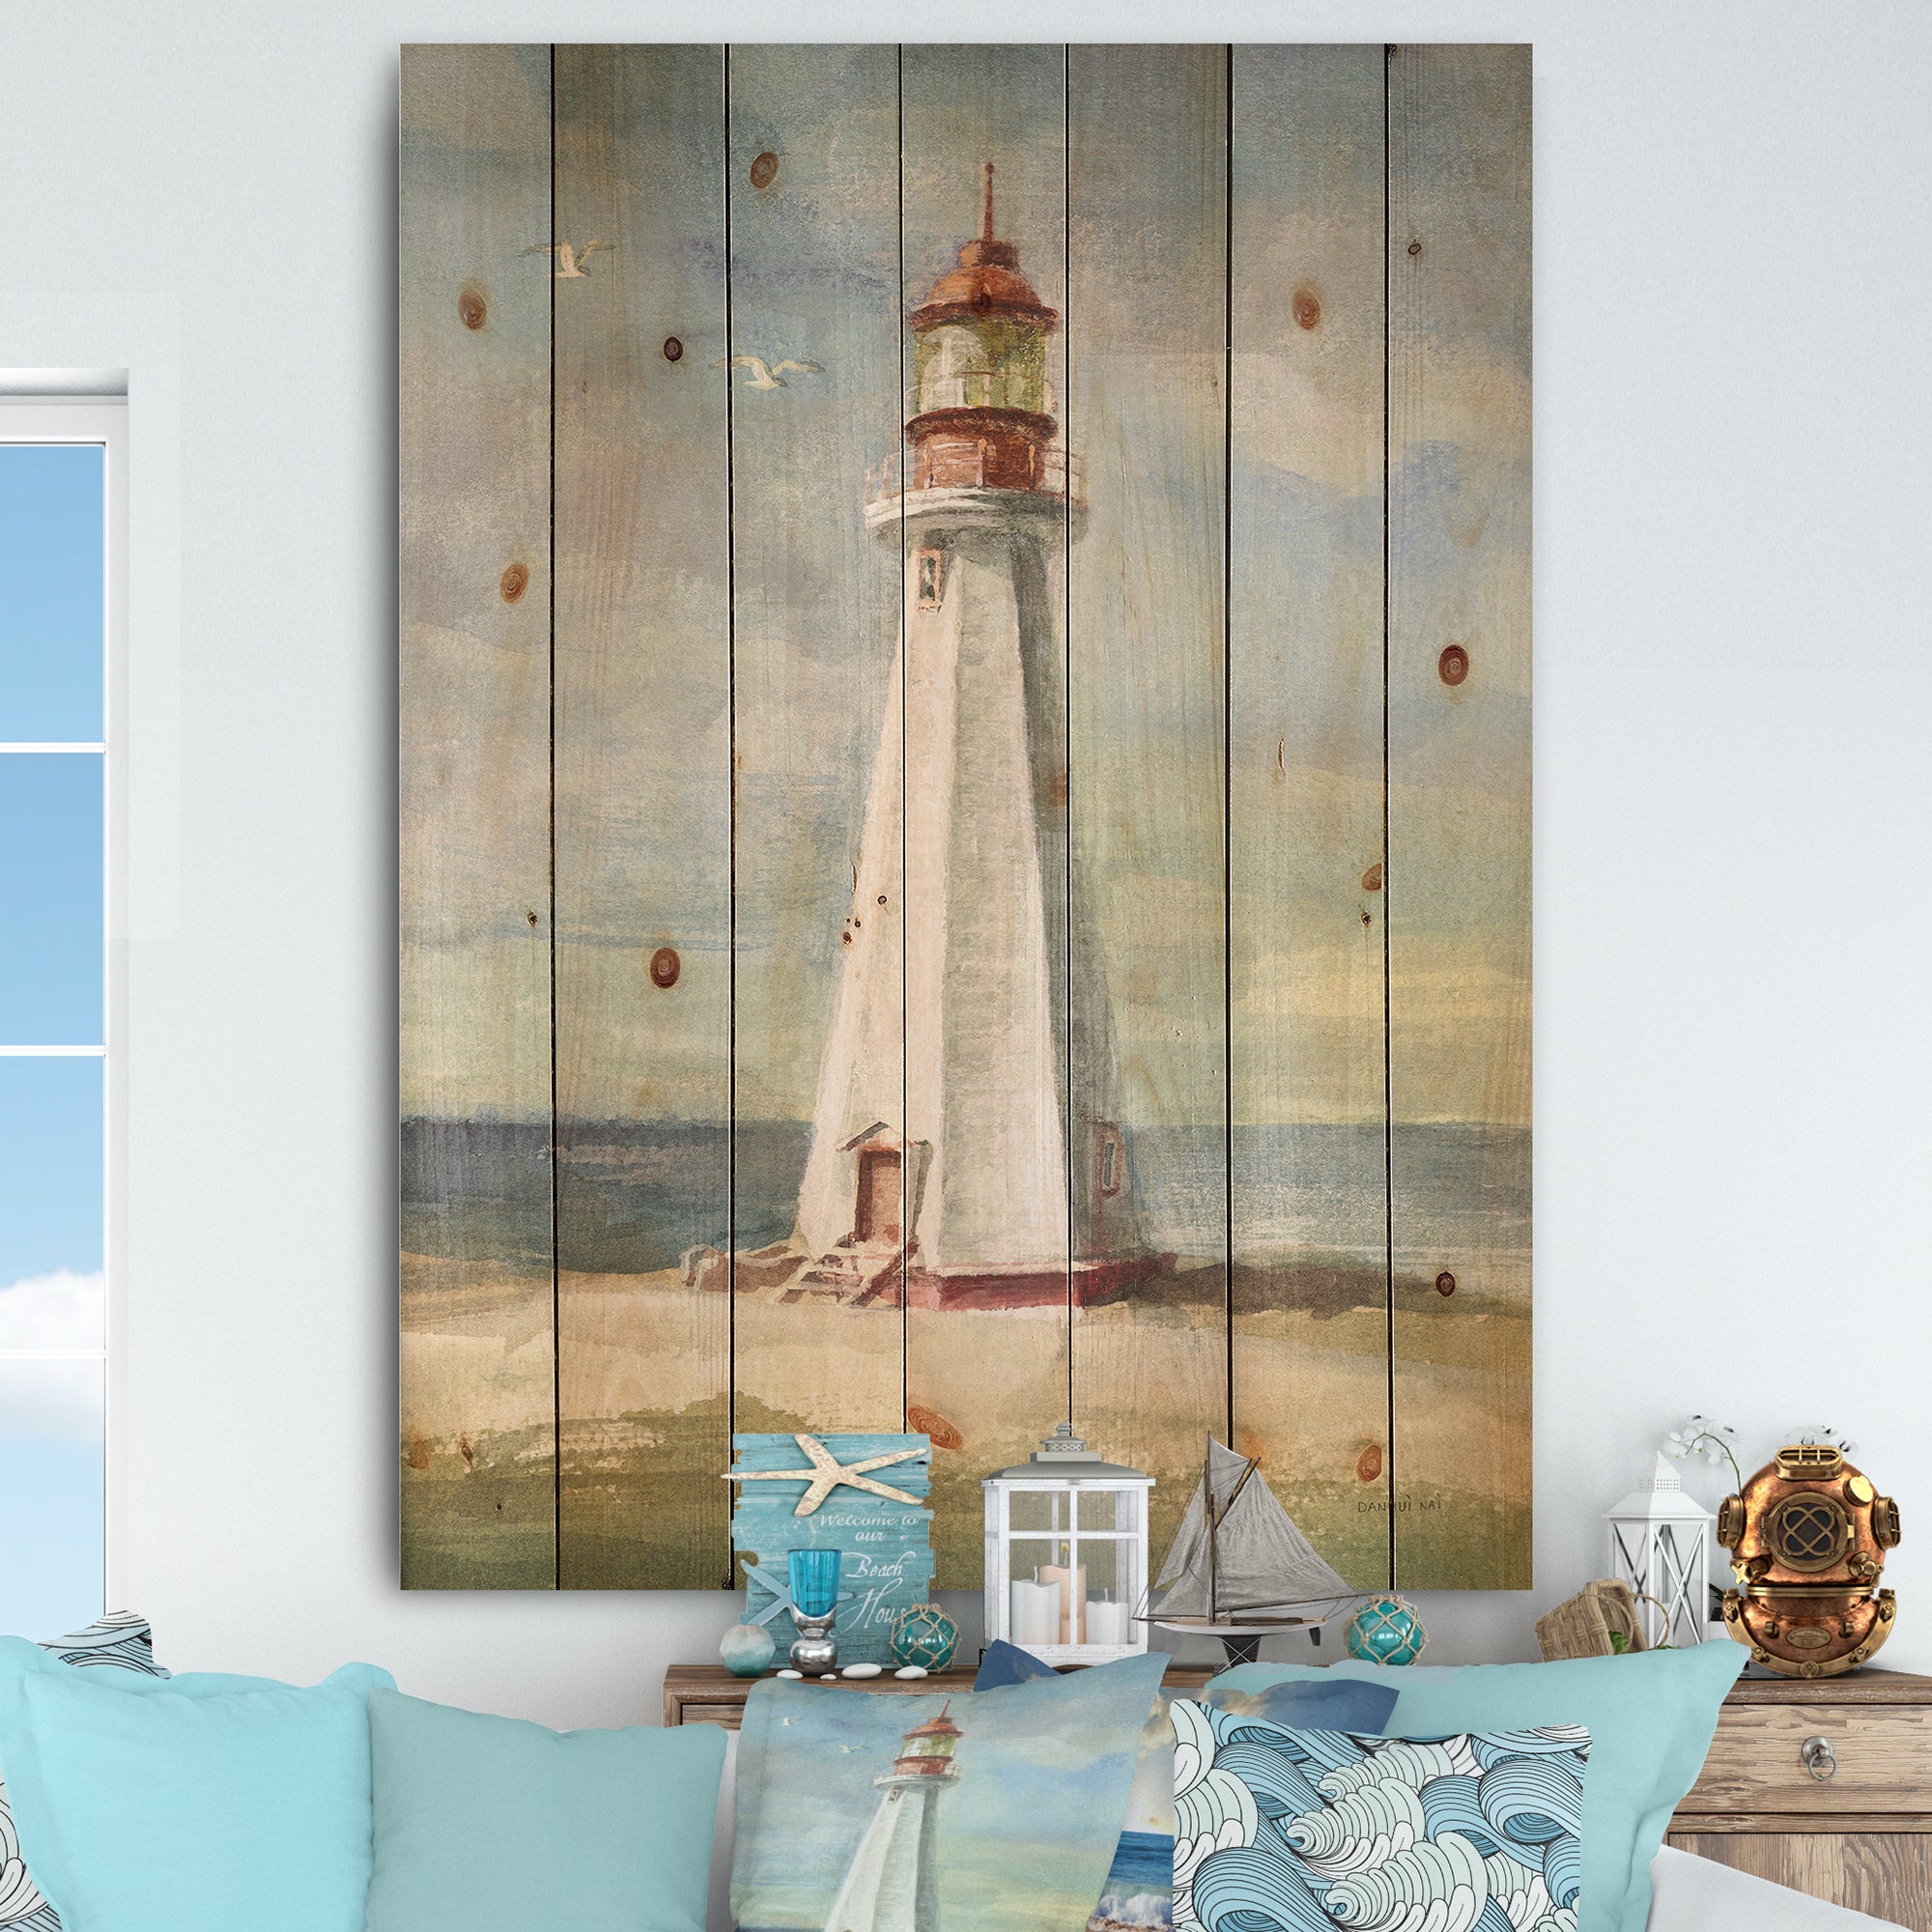 Nautical Lighthouse III - Nautical & Beach Print on Natural Pine Wood - 15x20